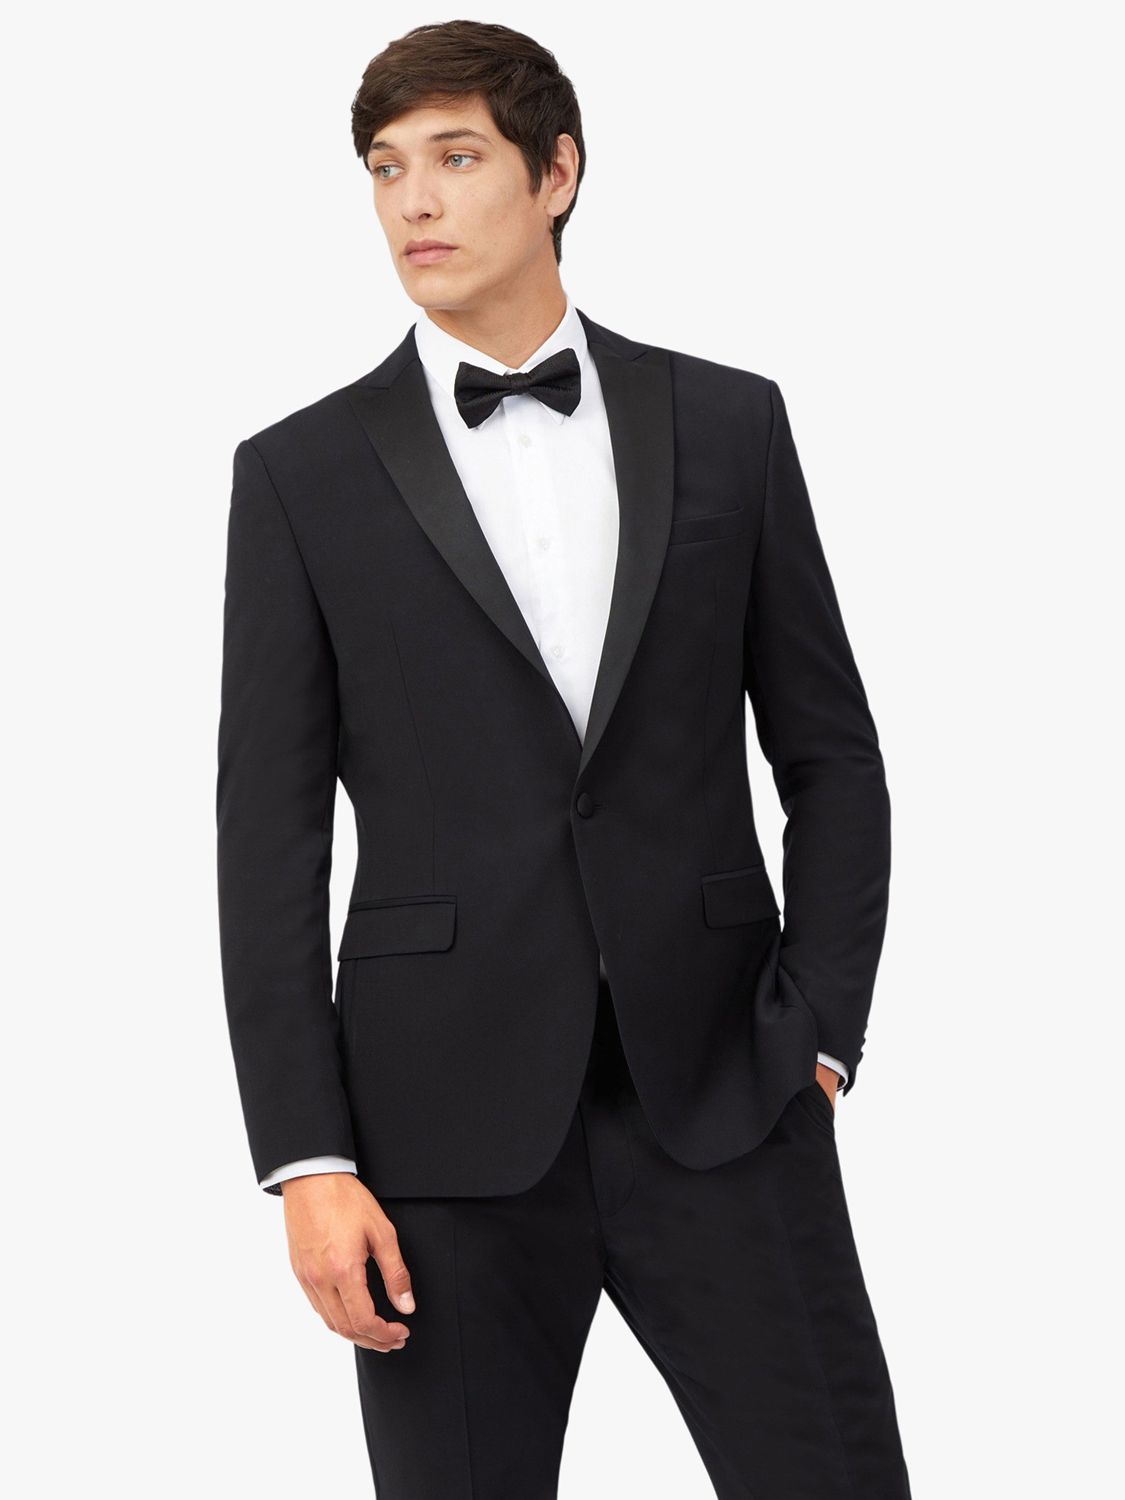 Ted Baker Wool Blend Tuxedo Suit Jacket, 290 Black at John Lewis & Partners